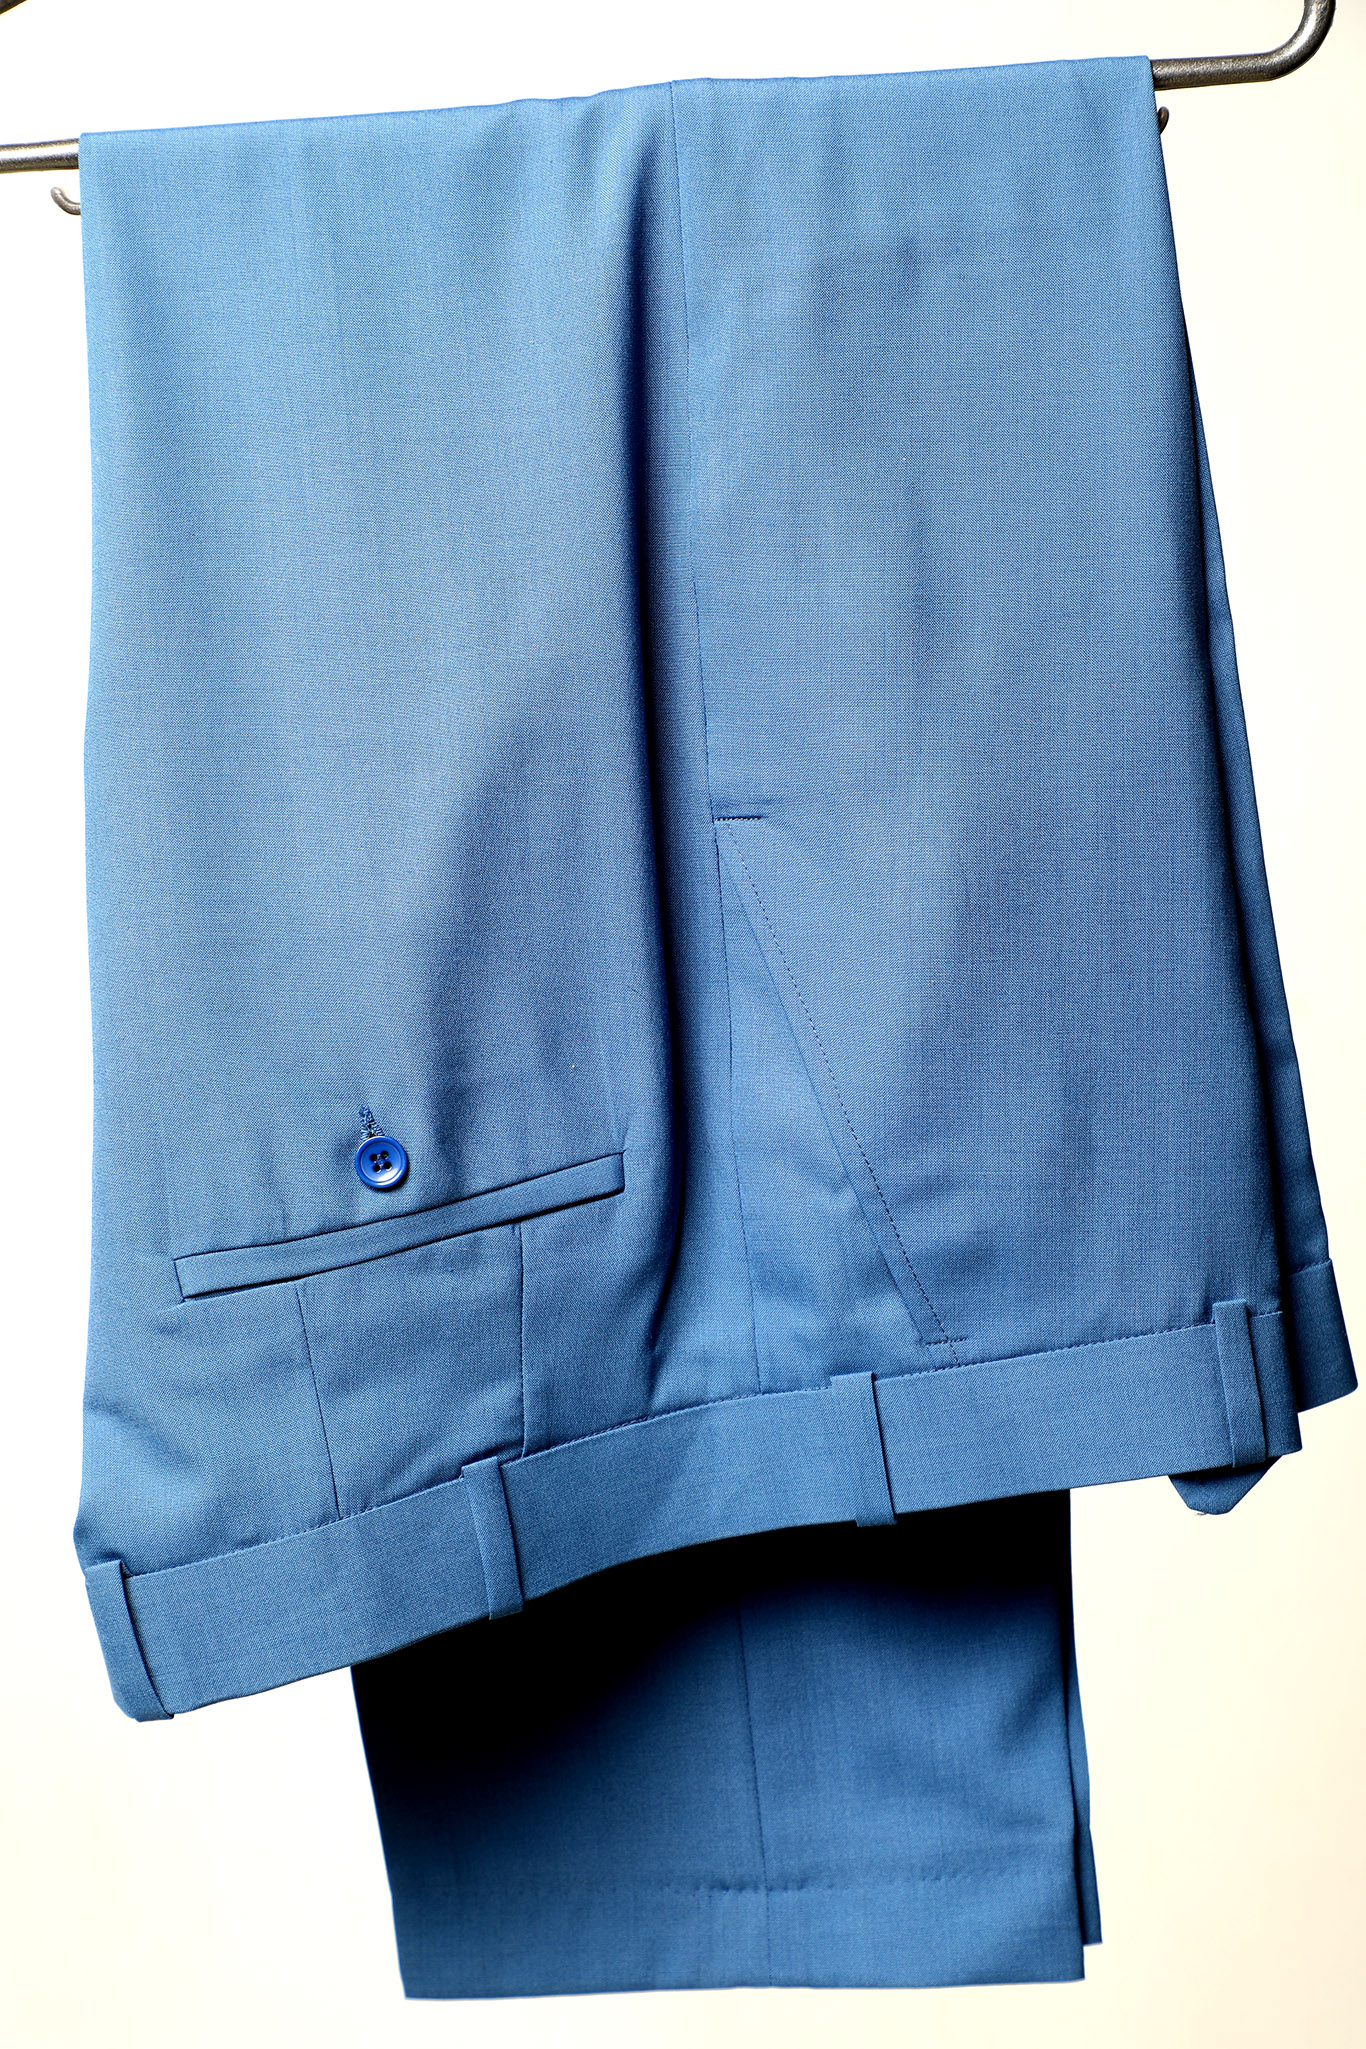 blue merino wool trousers nairobi kenya